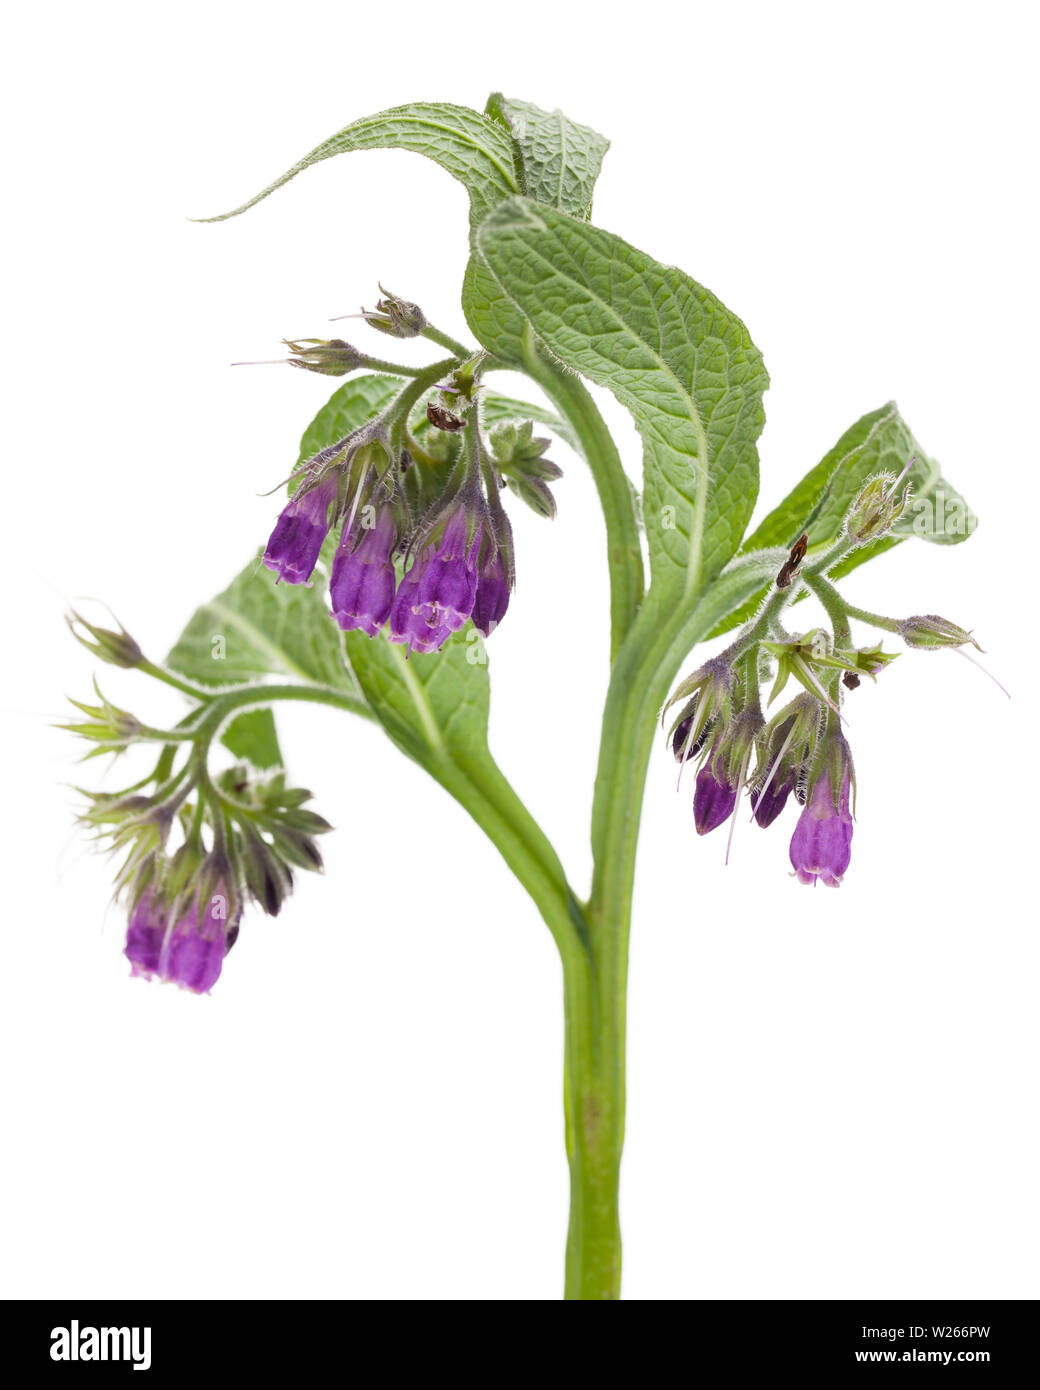 healing / medicinal plants: Comfrey (Symphytum officinale L.) detail against a white background Stock Photo